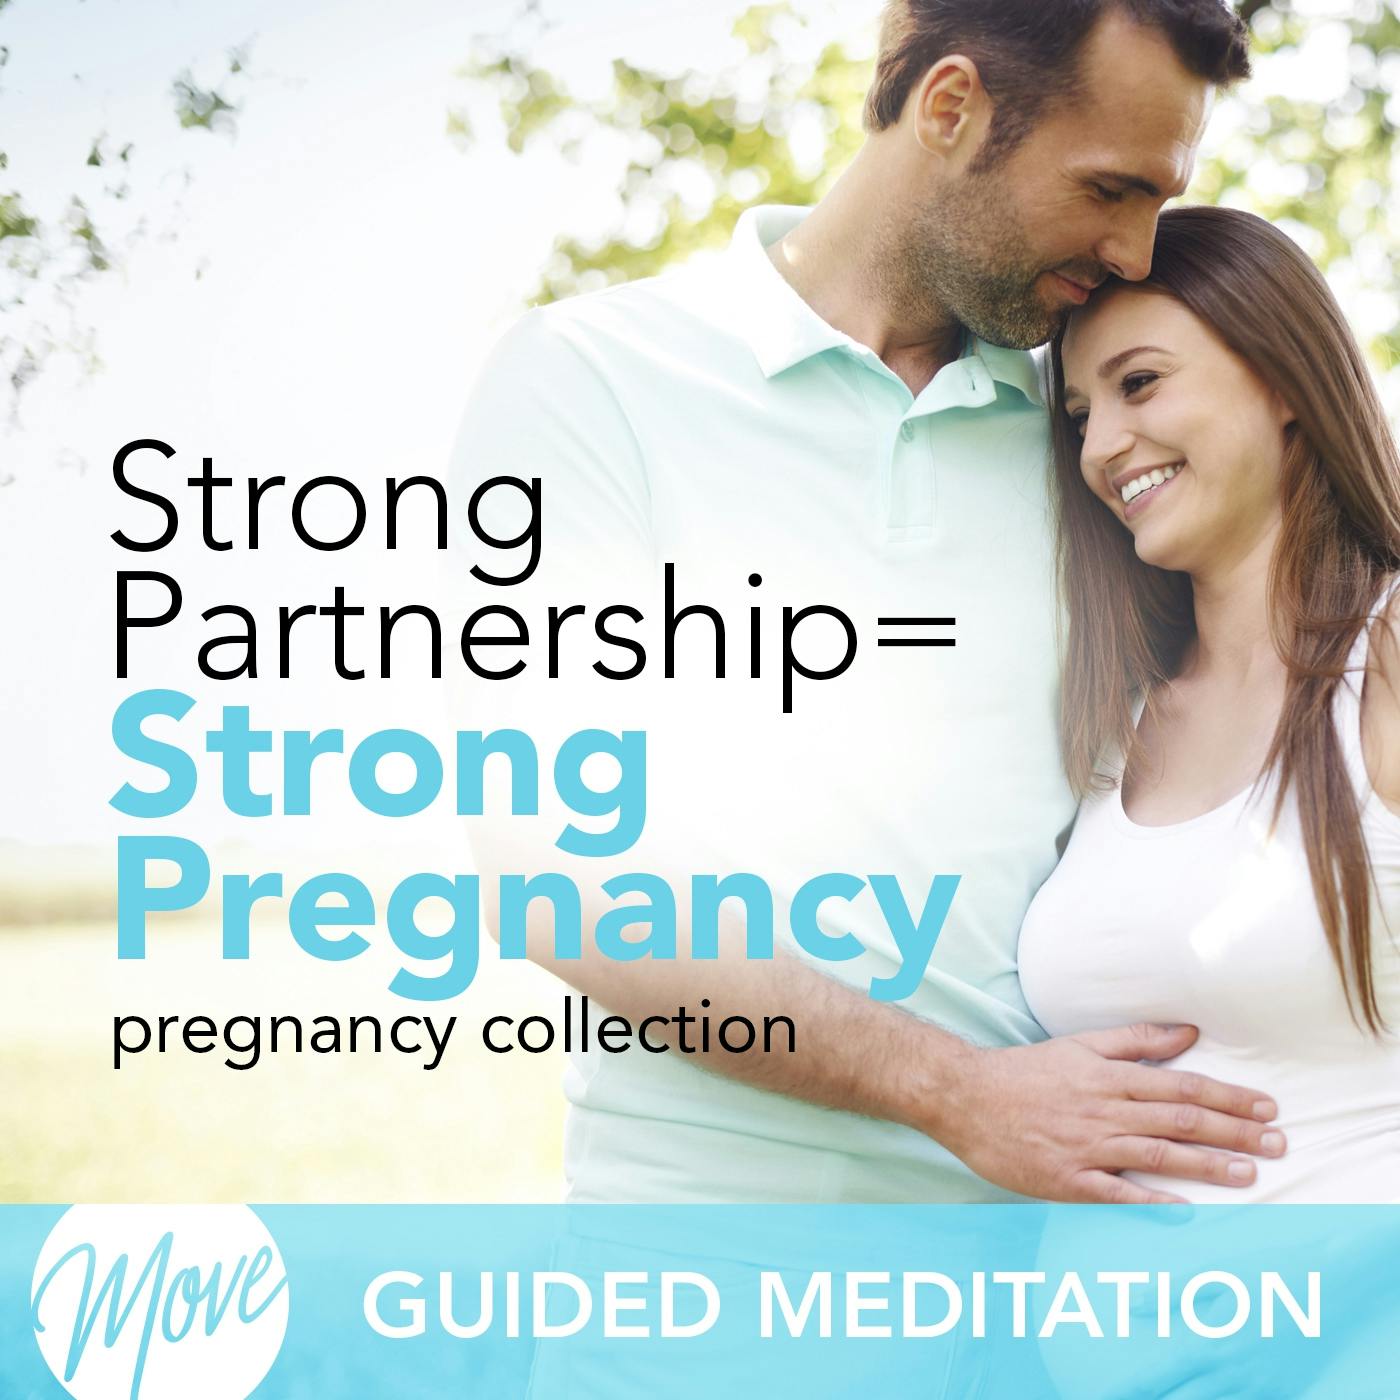 Strong Partnership = Strong Pregnancy - Amy Applebaum